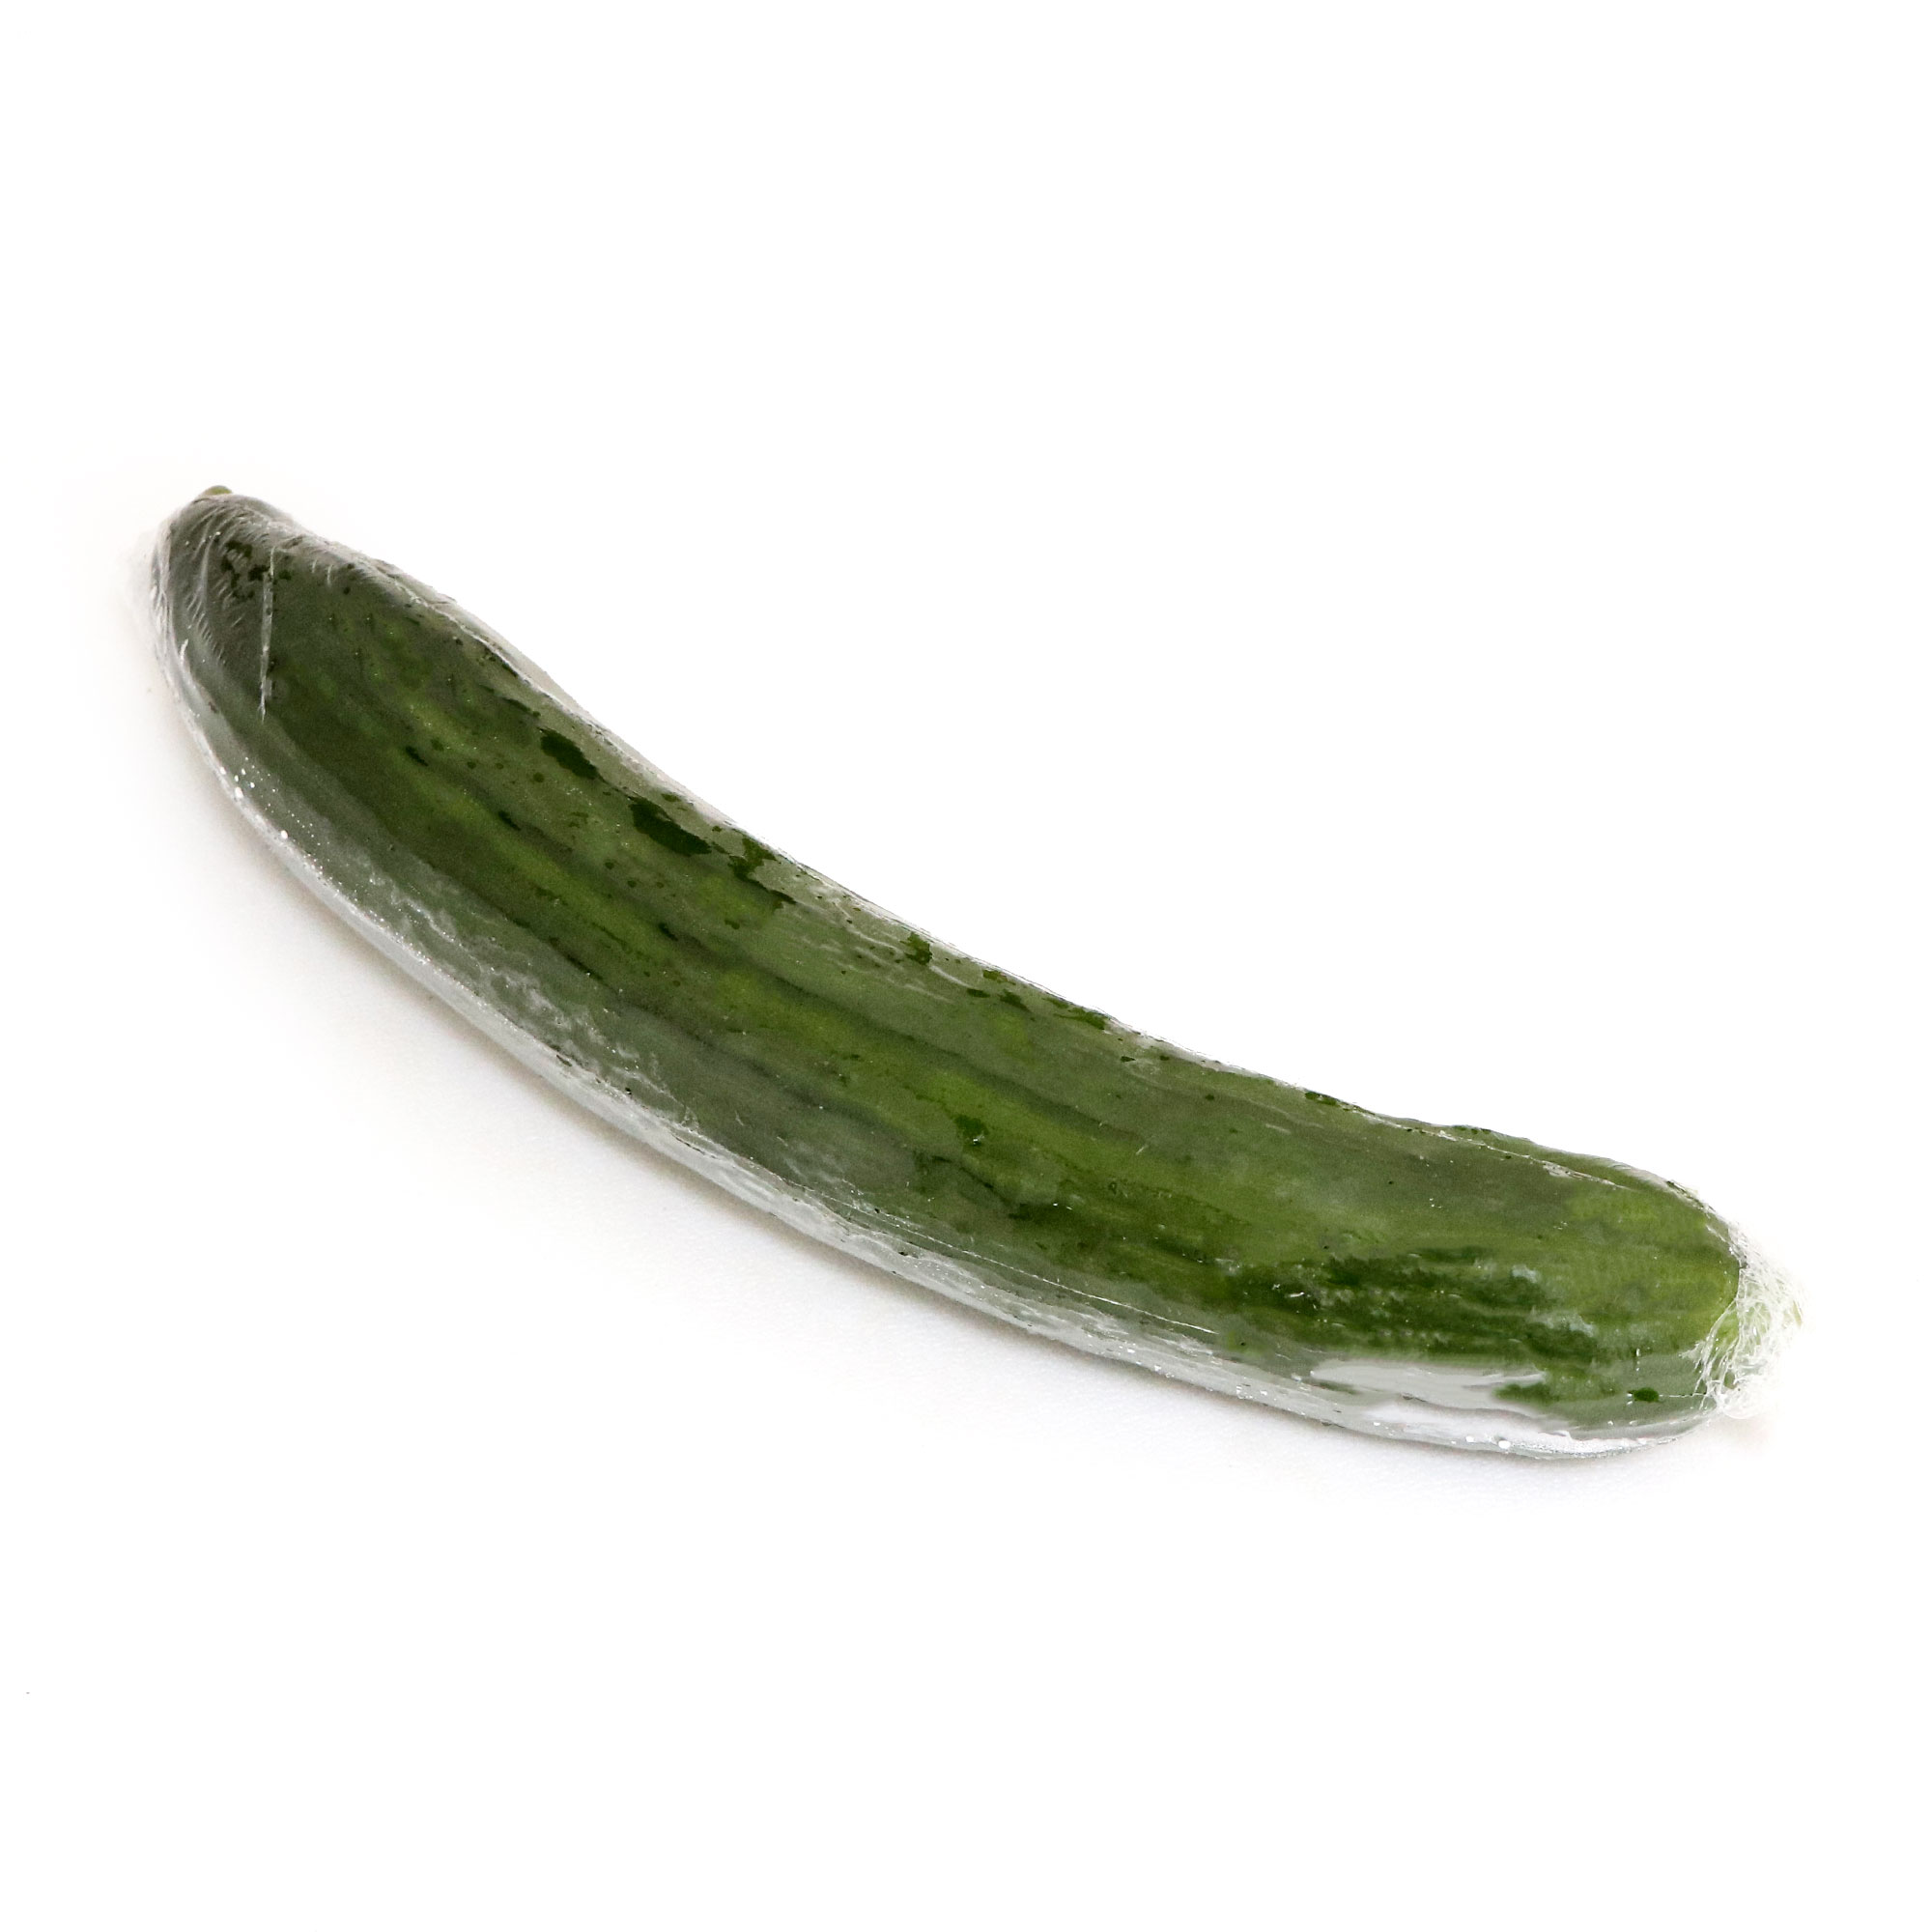 Cucumber sealed (1pc) 350g - Greece*